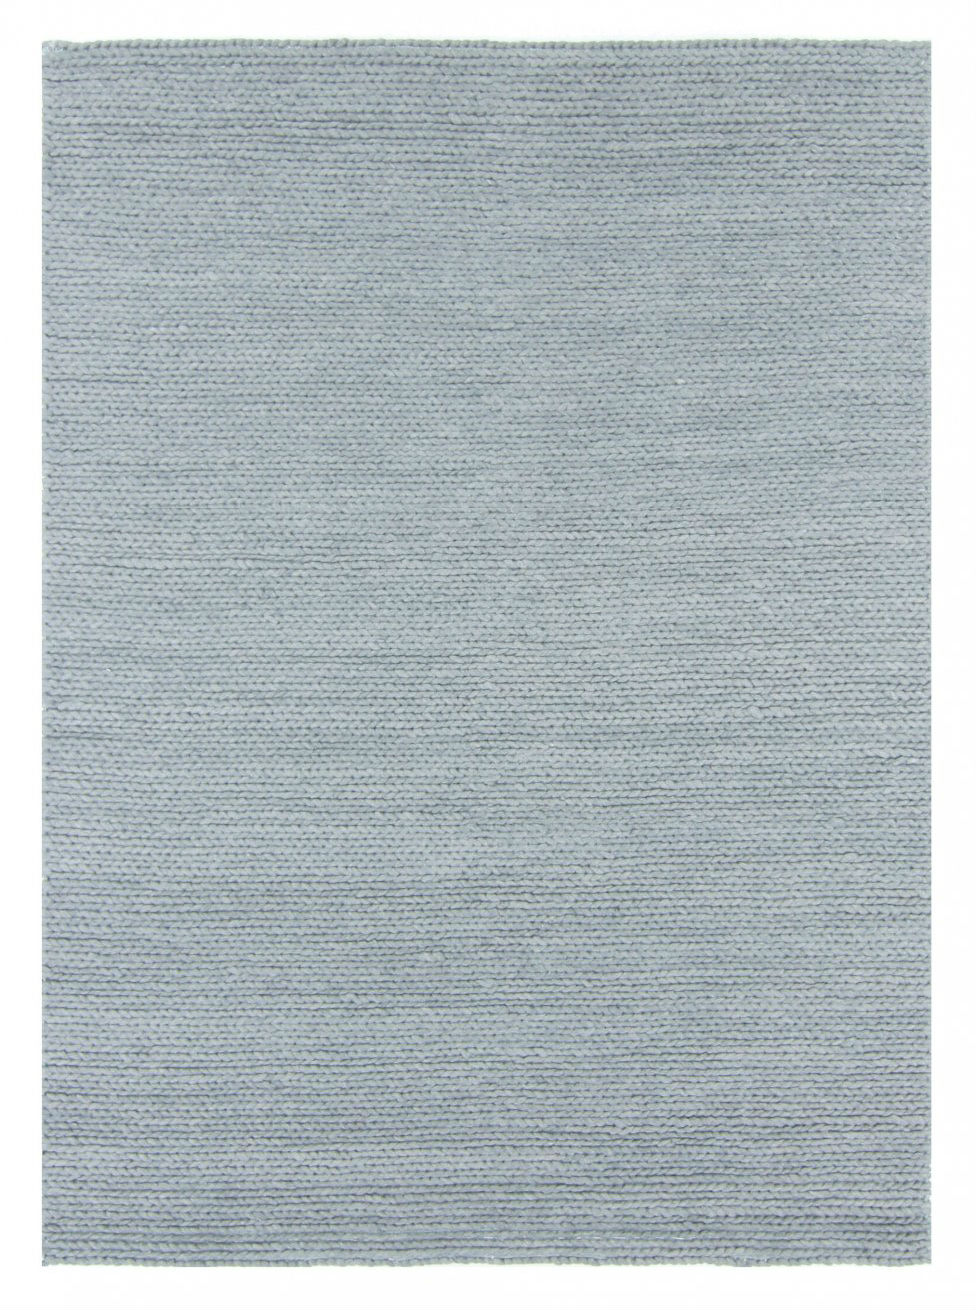 Wool rug - Lynmouth (light grey)